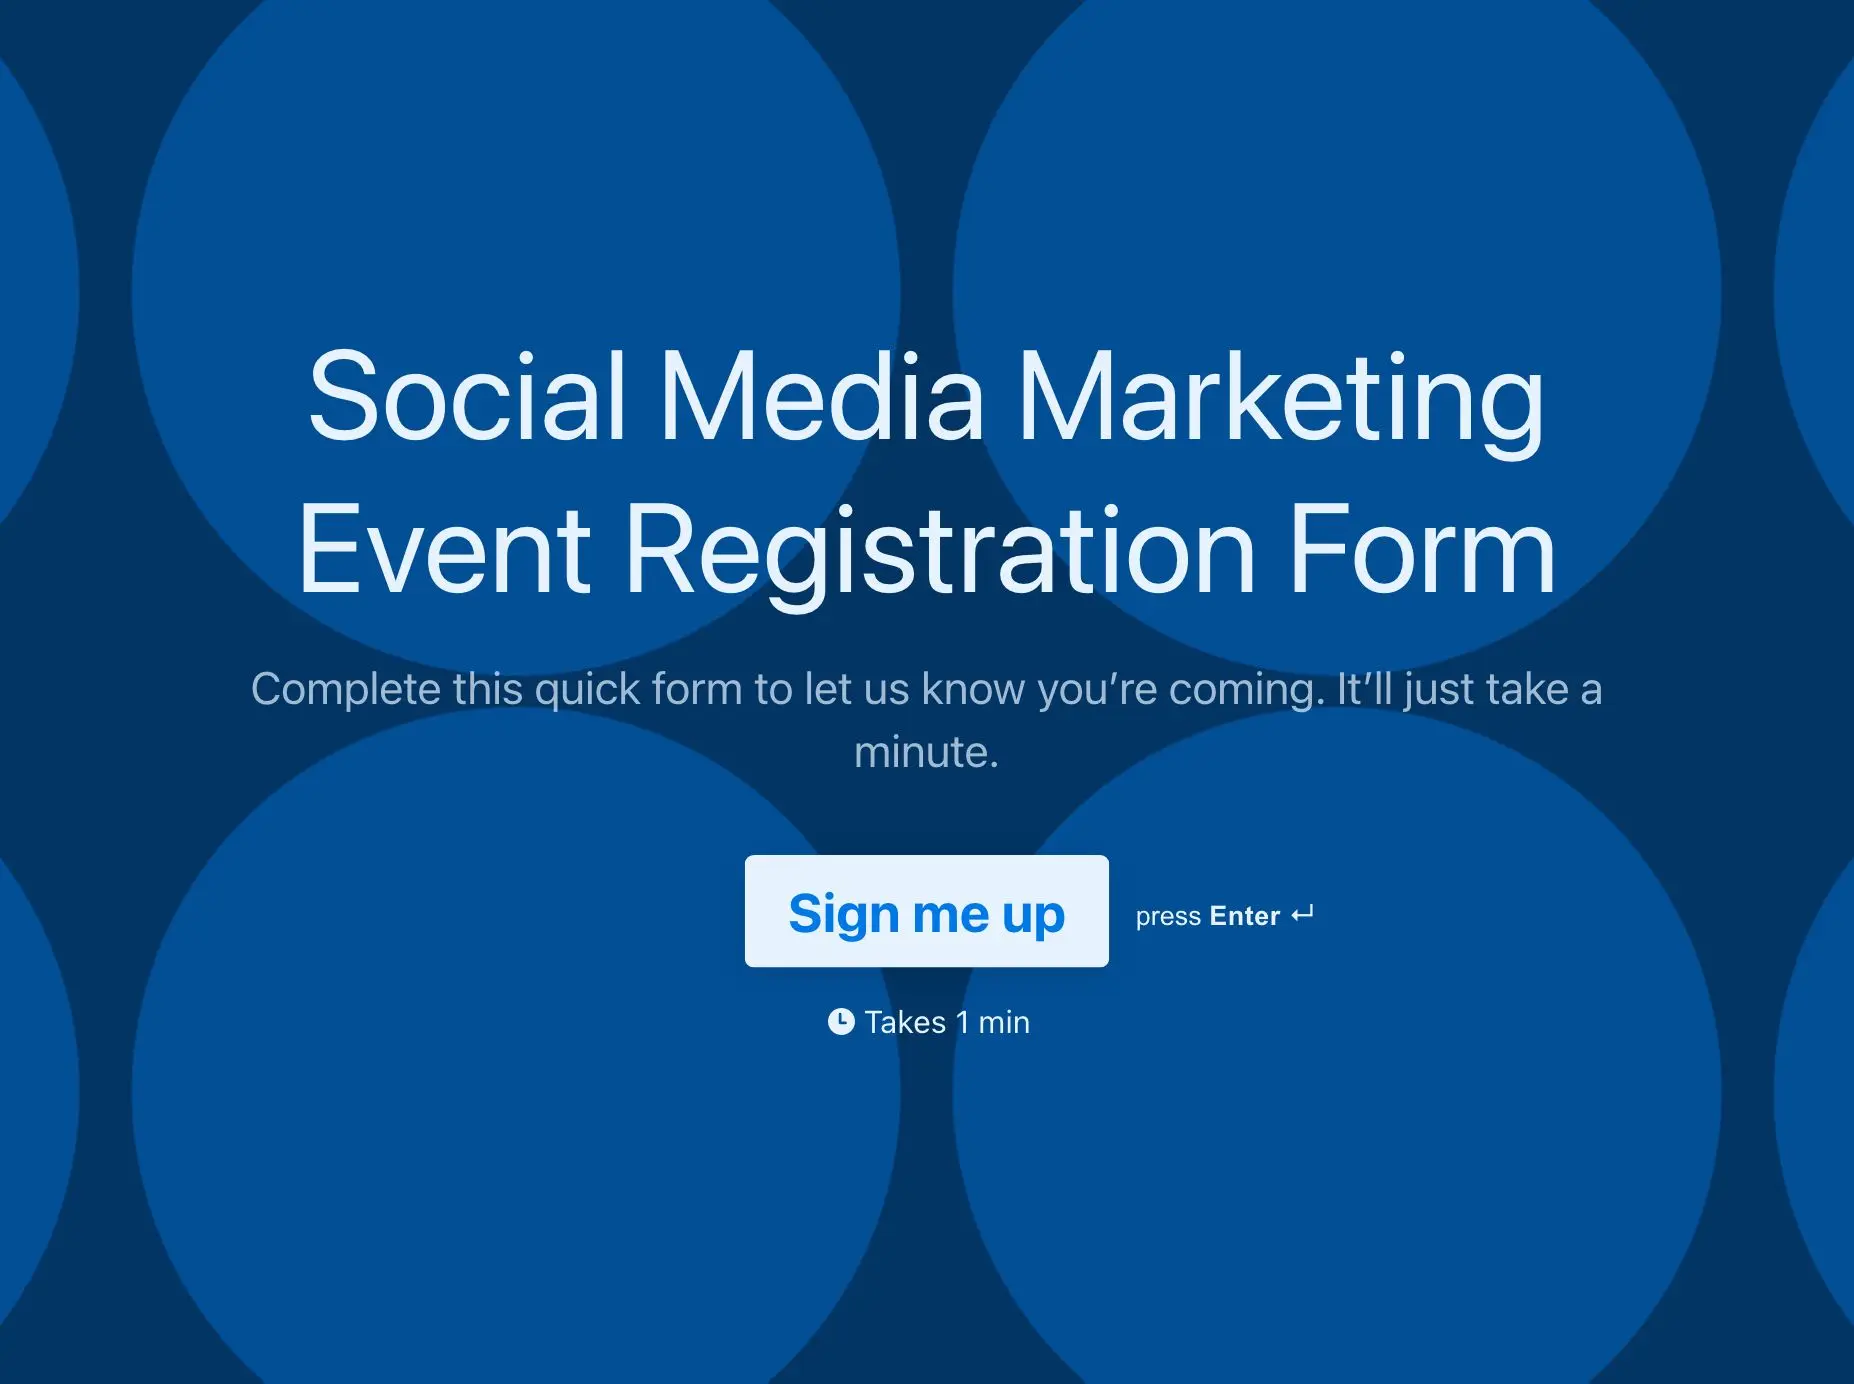 Social Media Marketing Event Registration Form Template Hero